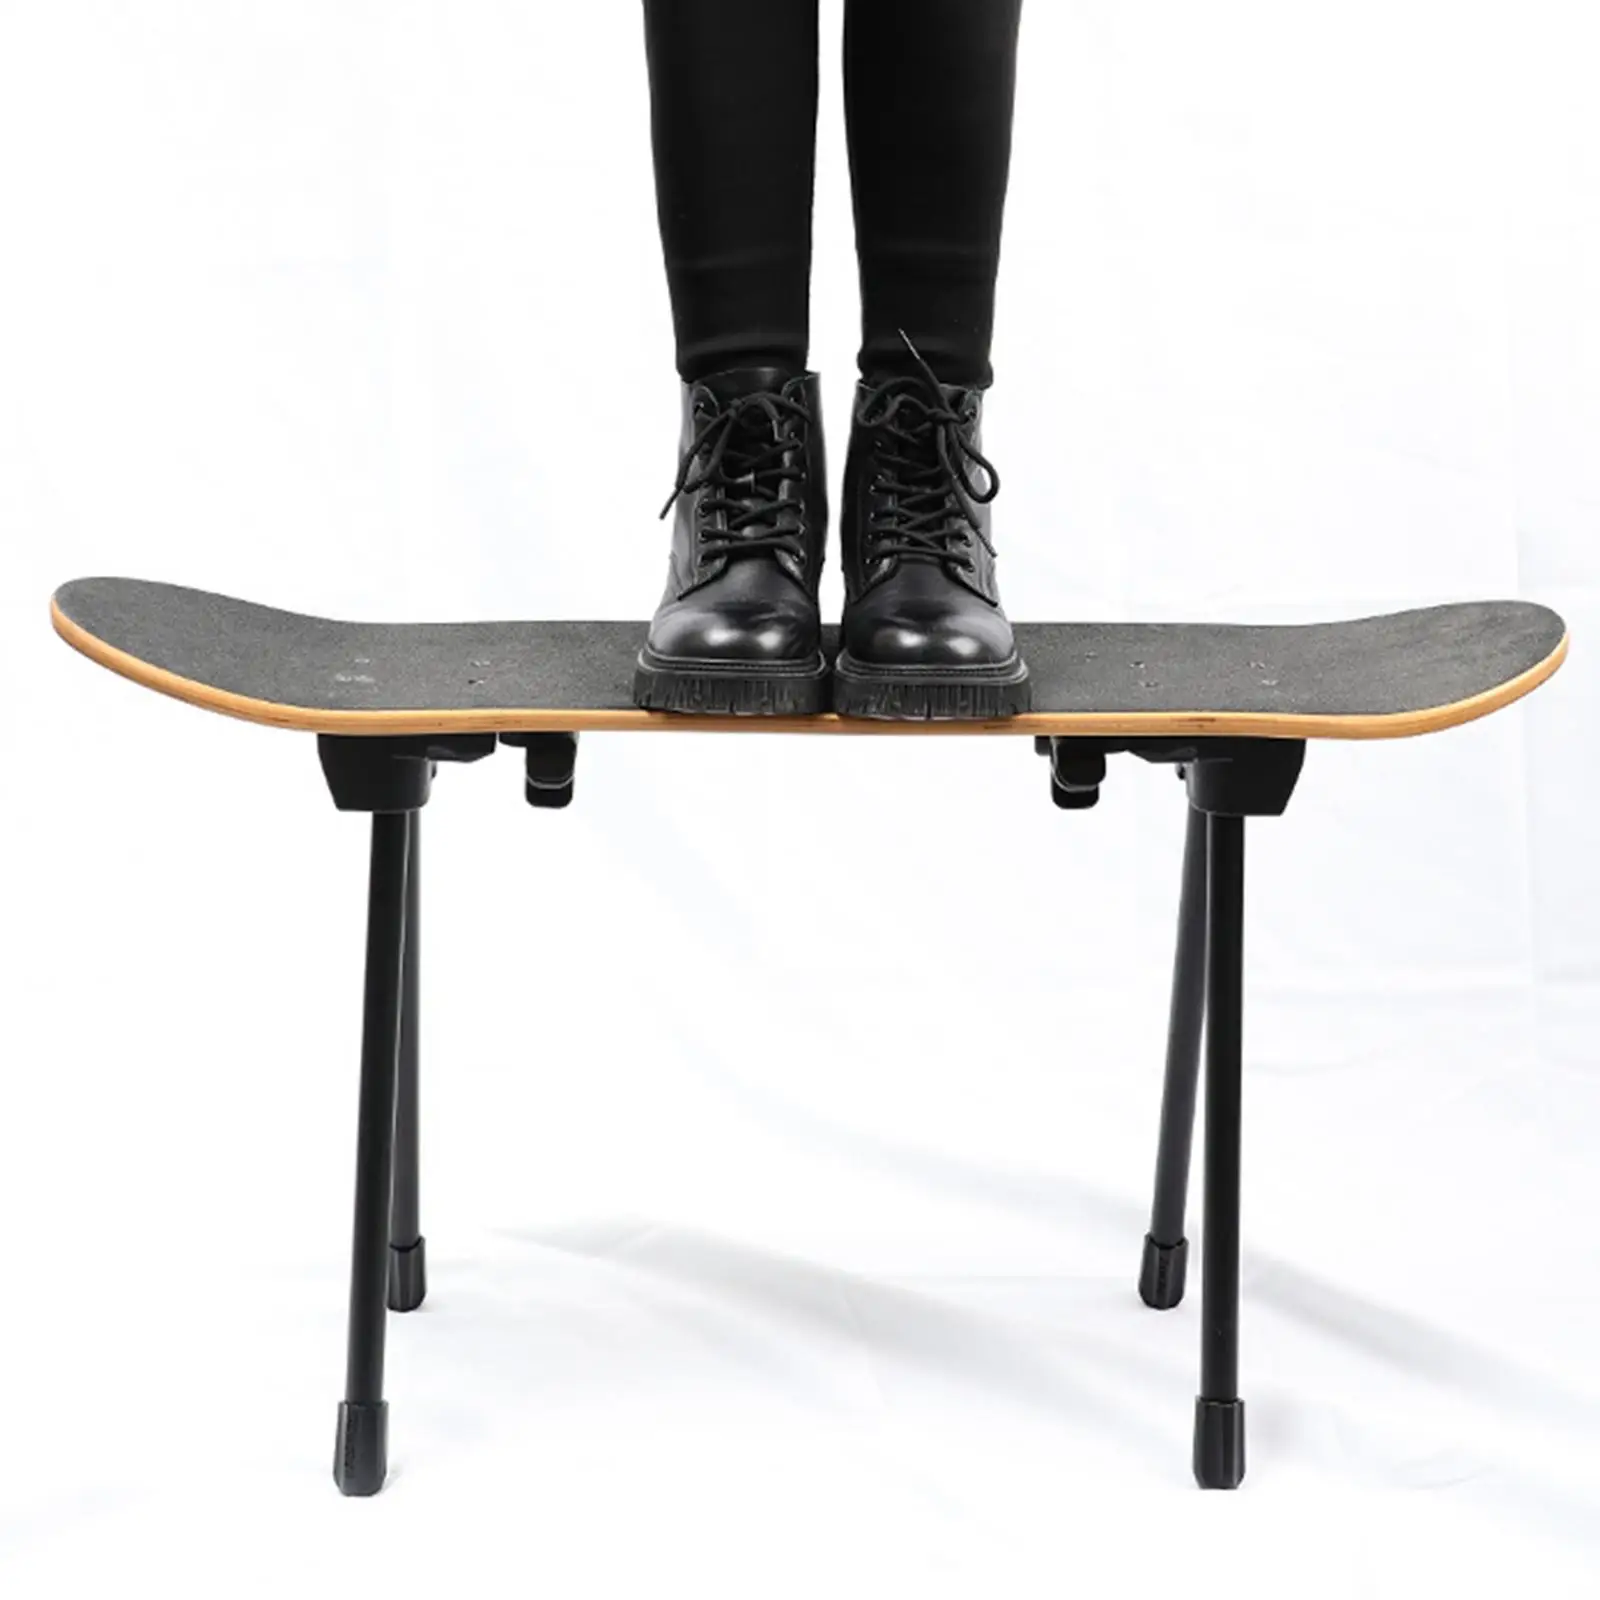 1 Pair of Camping Table Skateboard Foot Skateboard Bracket DIY Table Foot Coffee Table Leg Folding Table Leg Outdoor Travel